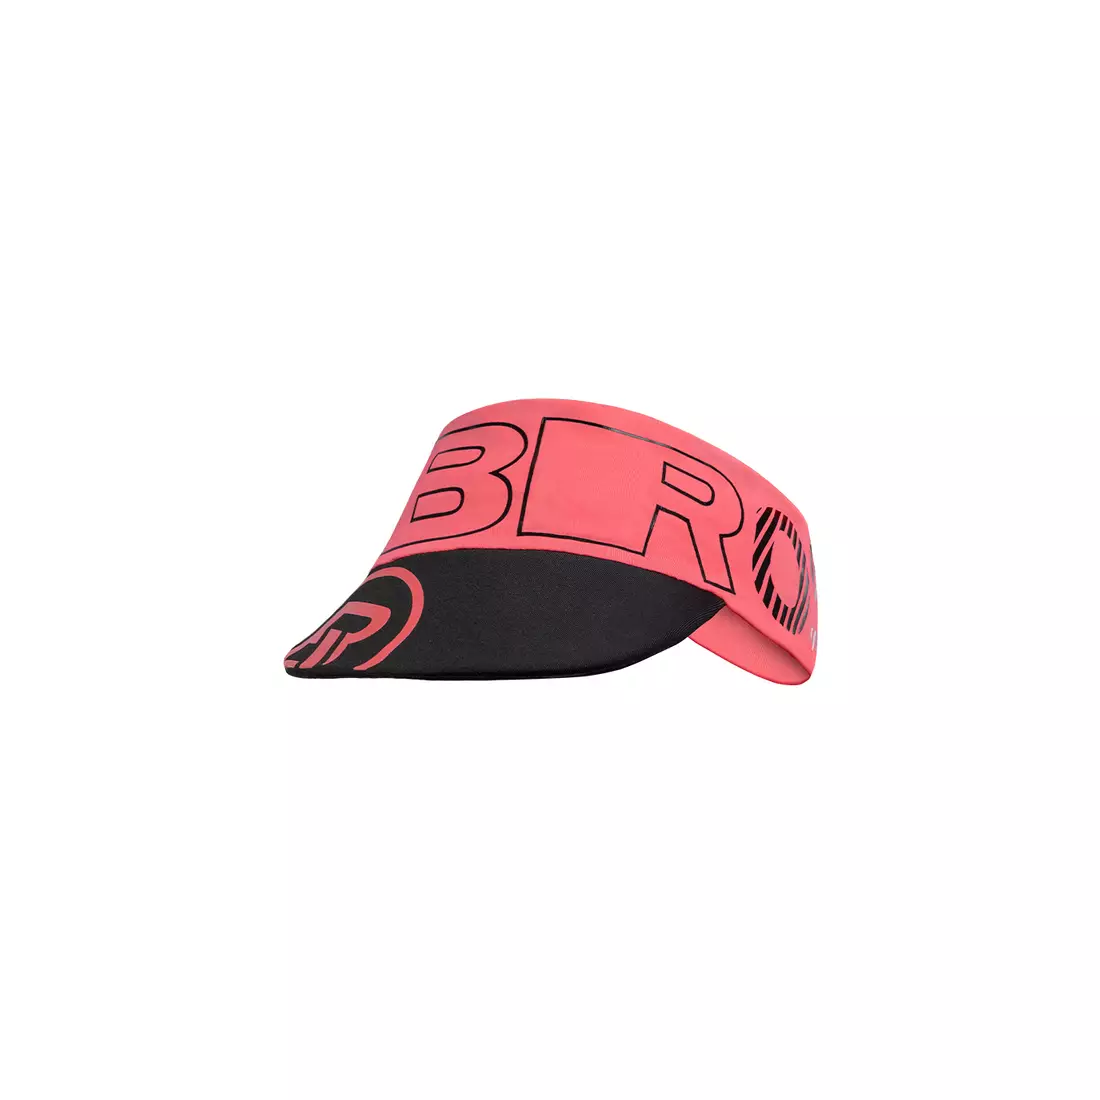 Rockbros sports headband with a visor, red LF7628-4